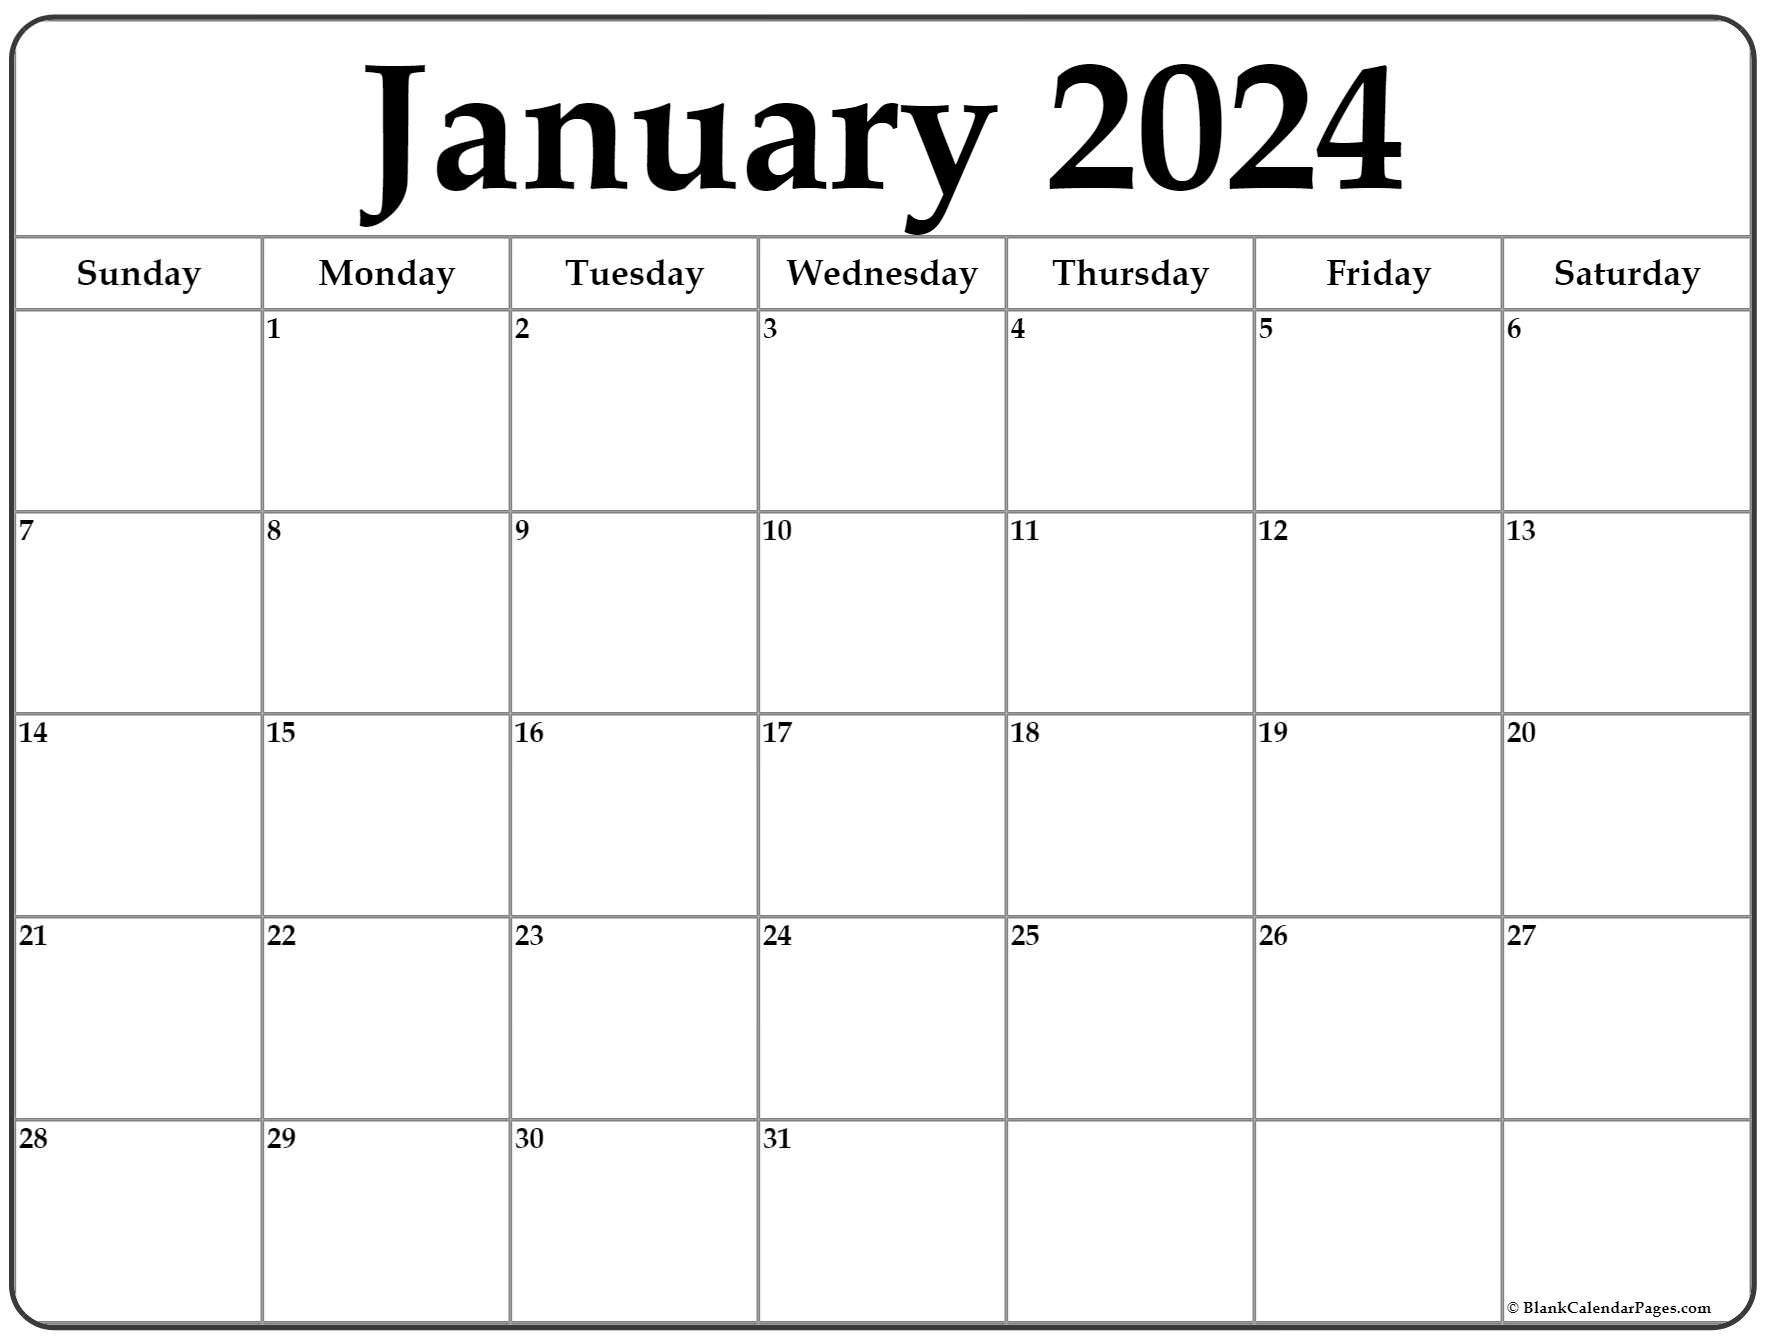 January 2024 Calendar | Free Printable Calendar | January 2024 Calendar Printable Free